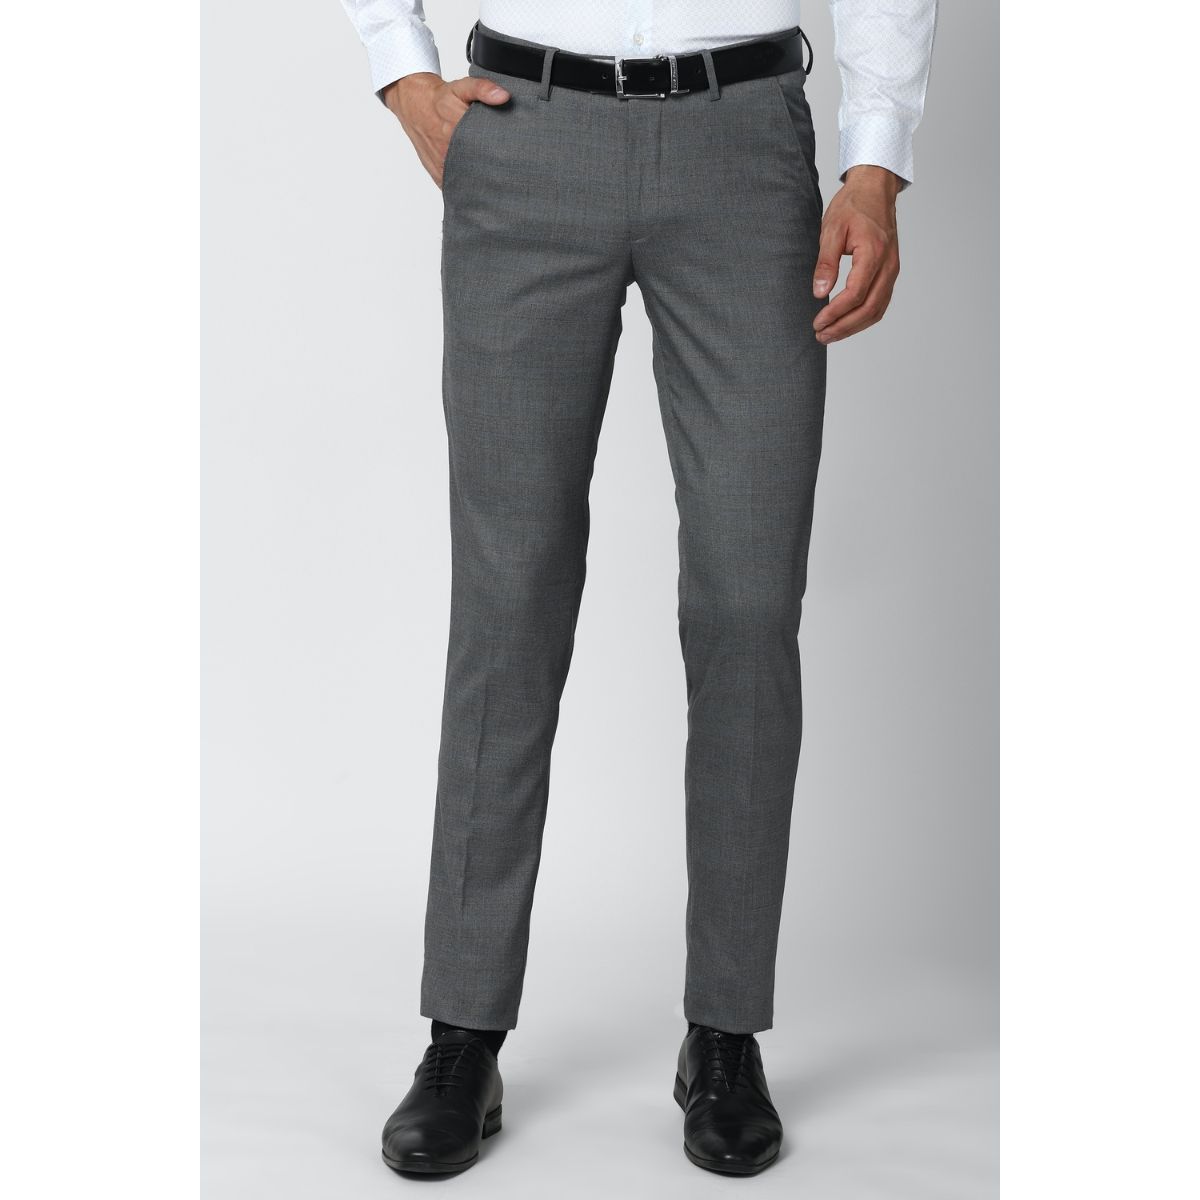 PETER ENGLAND Slim Fit Men White Trousers - Buy PETER ENGLAND Slim Fit Men  White Trousers Online at Best Prices in India | Flipkart.com